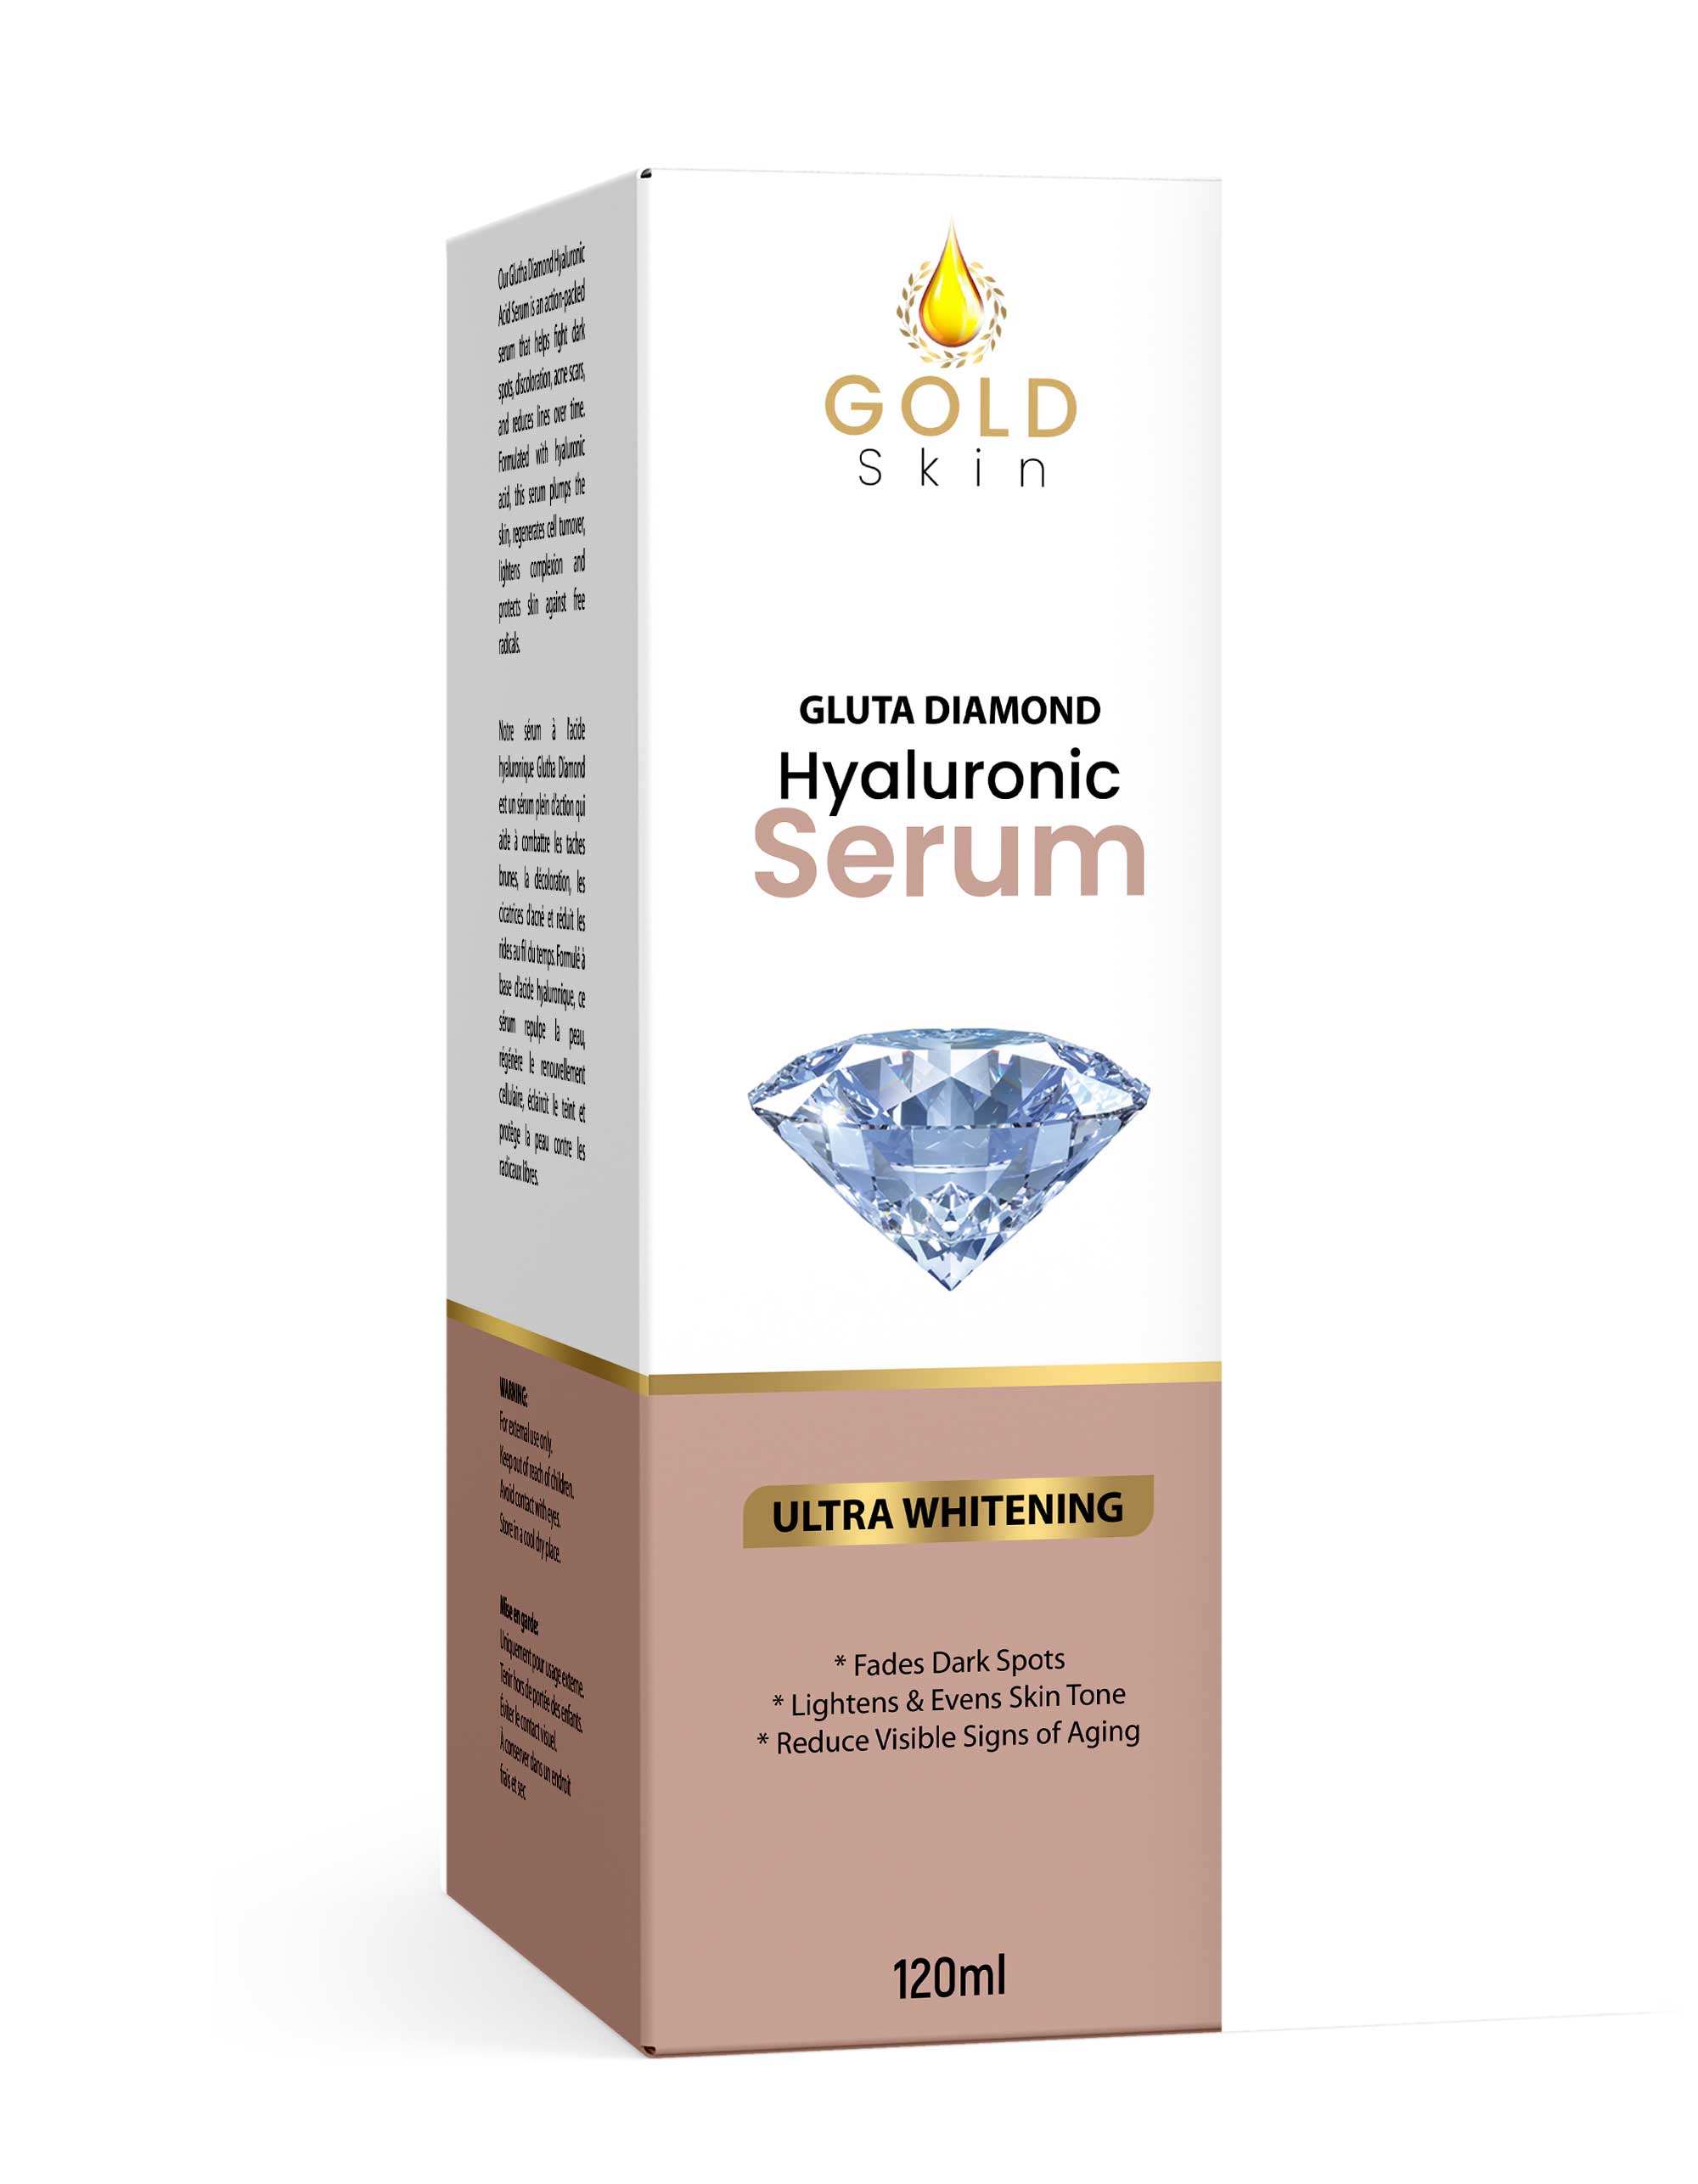 Gluta Diamond Hyaluronic Serum